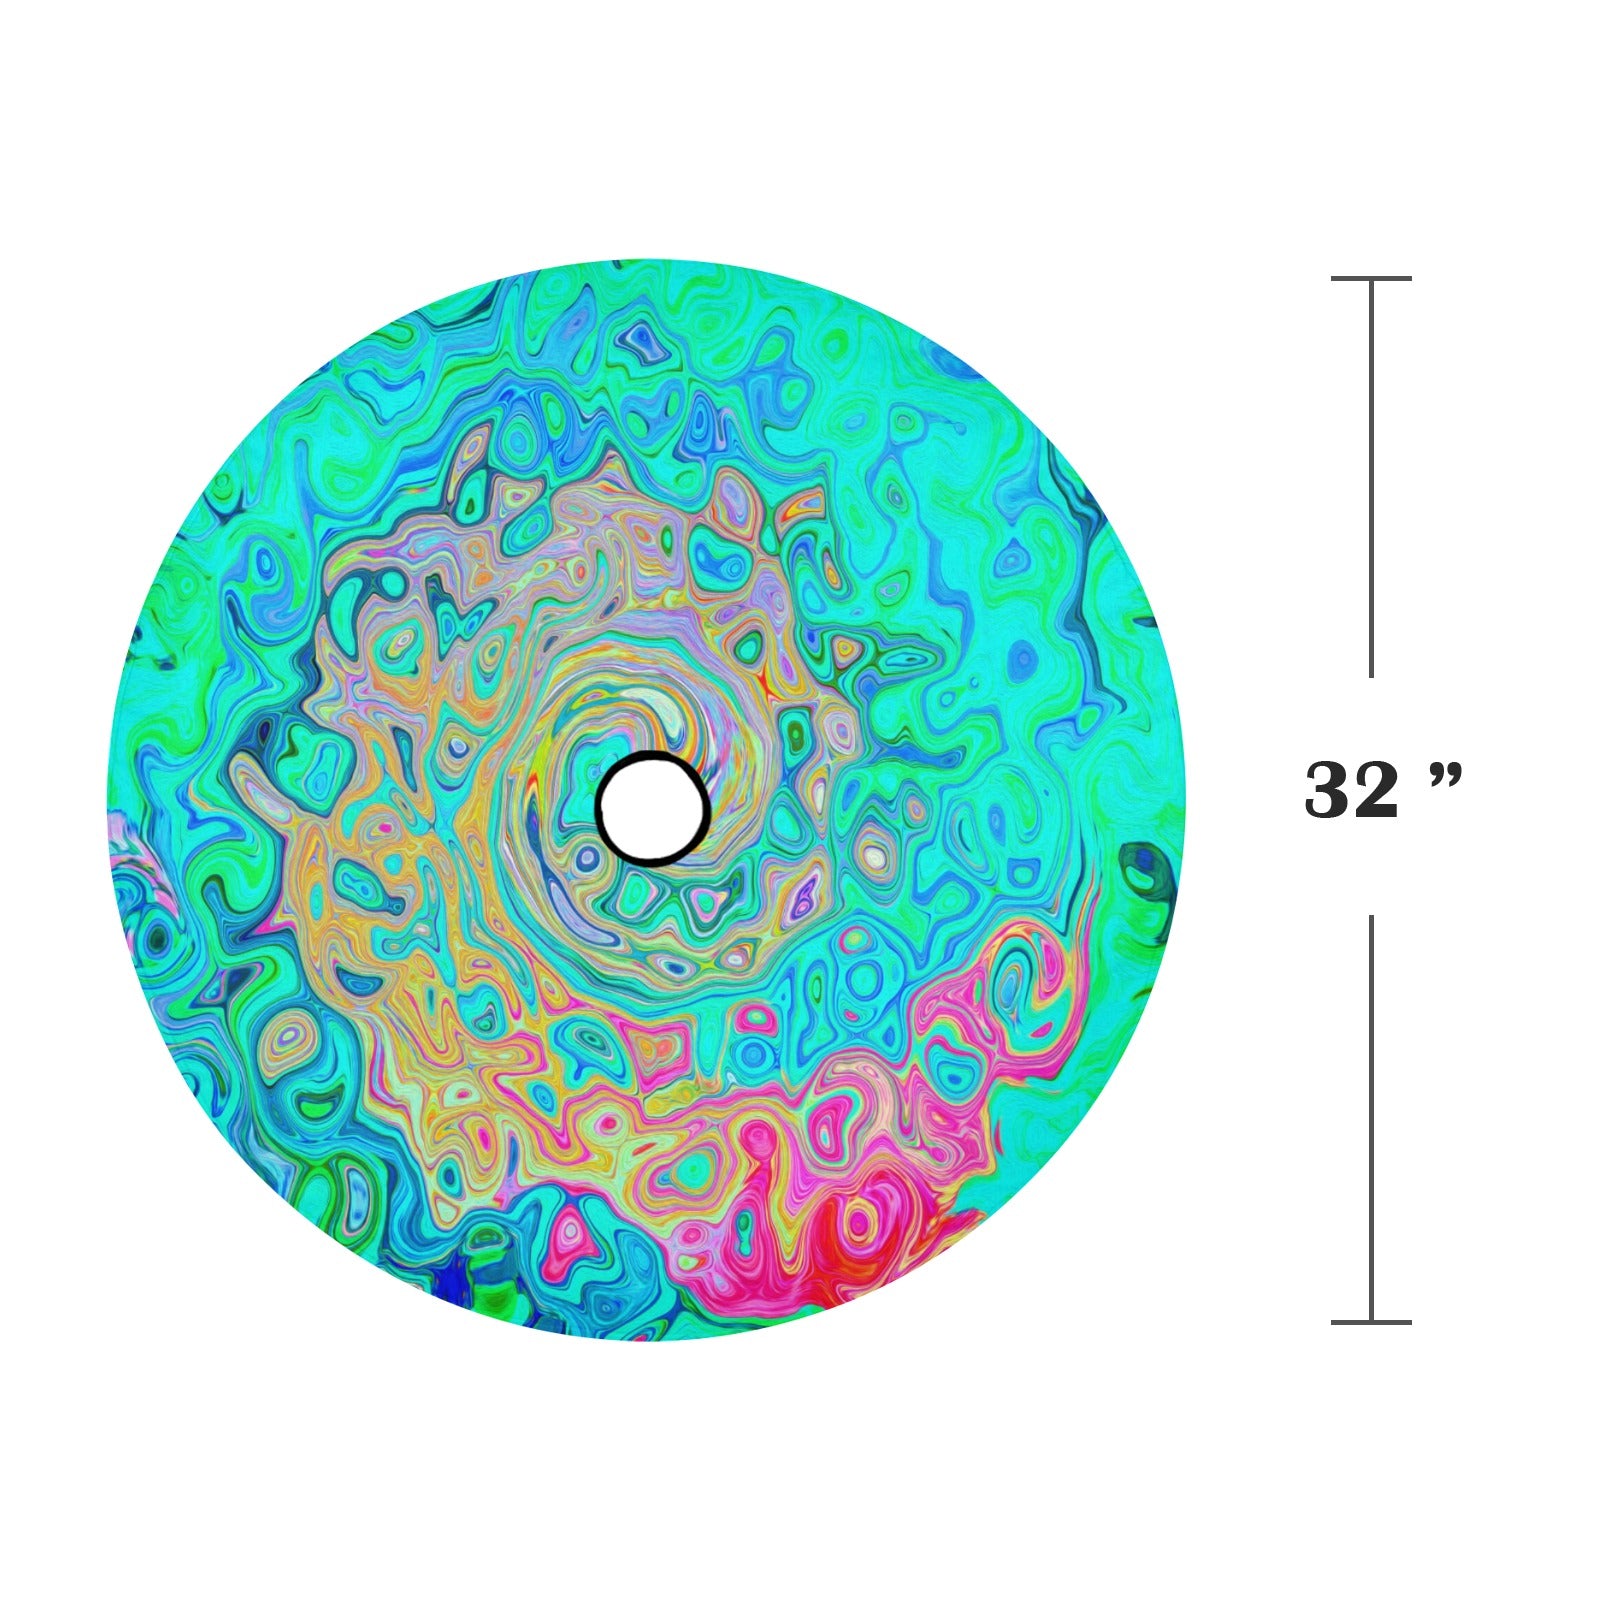 Spare Tire Cover with Backup Camera Hole - Groovy Abstract Retro Rainbow Liquid Swirl - Medium